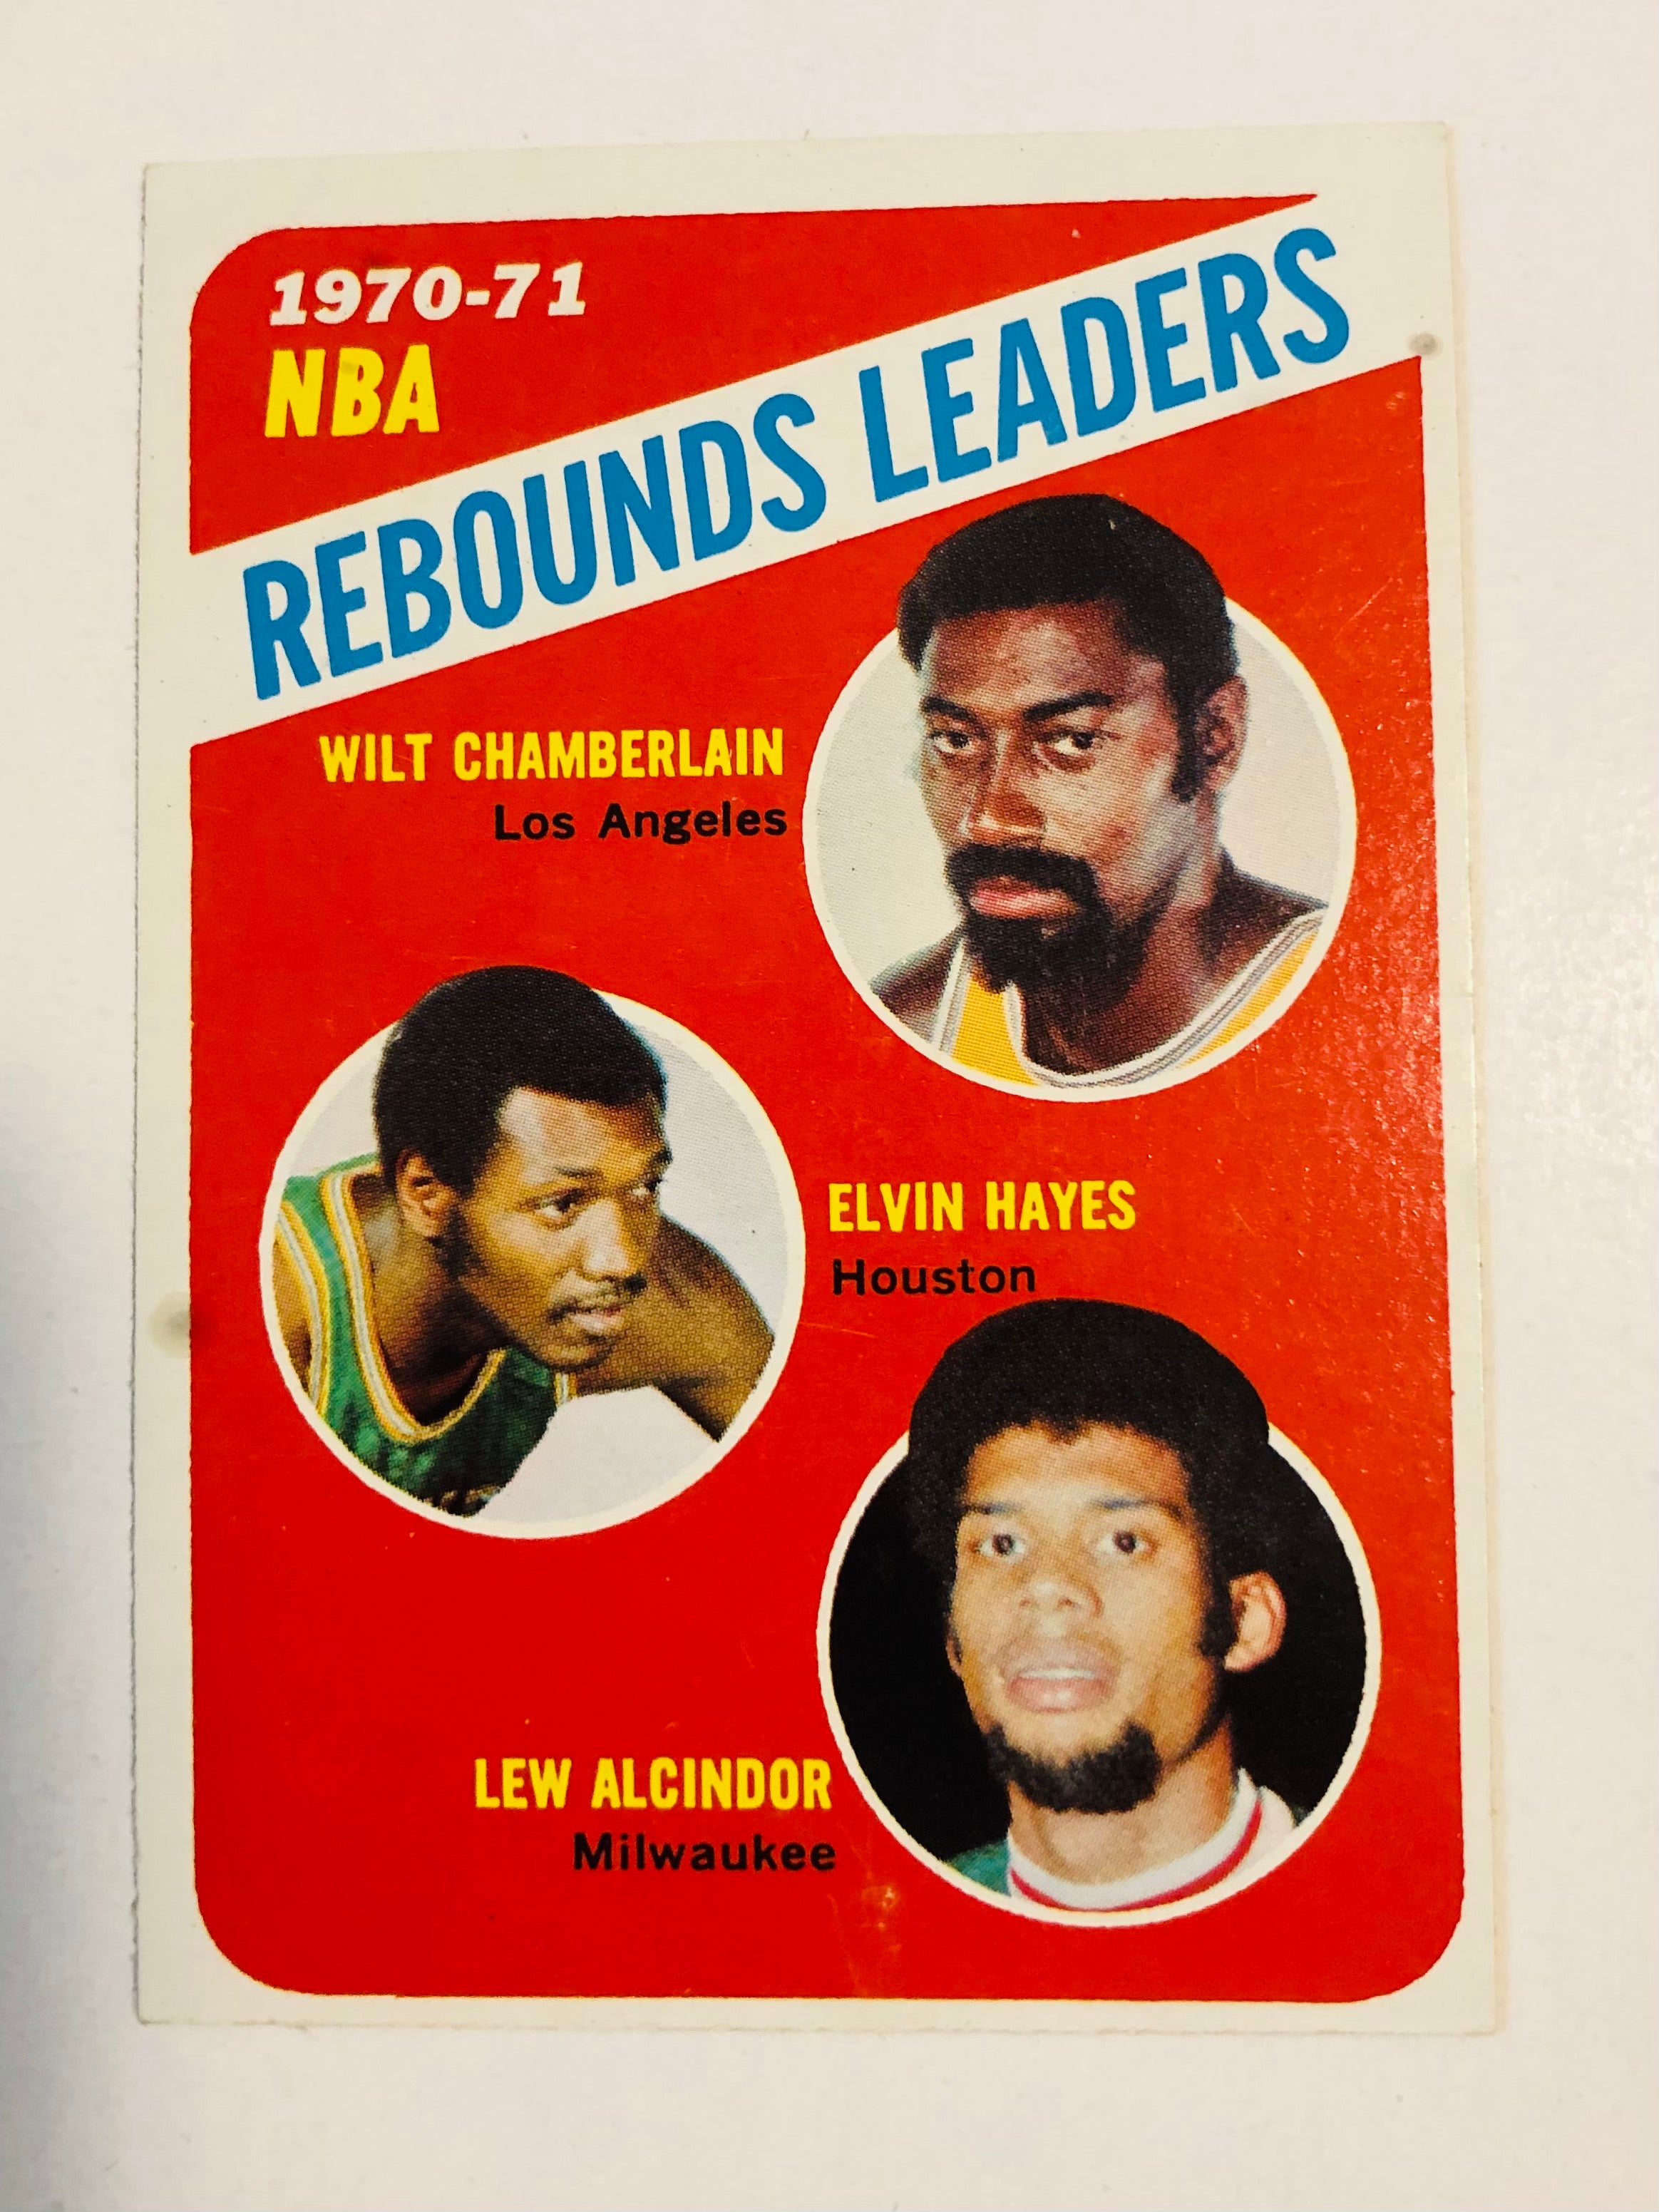 Kareem Abdul Jabbar and Wilt Chamberlain Rebound leaders basketball card 1971